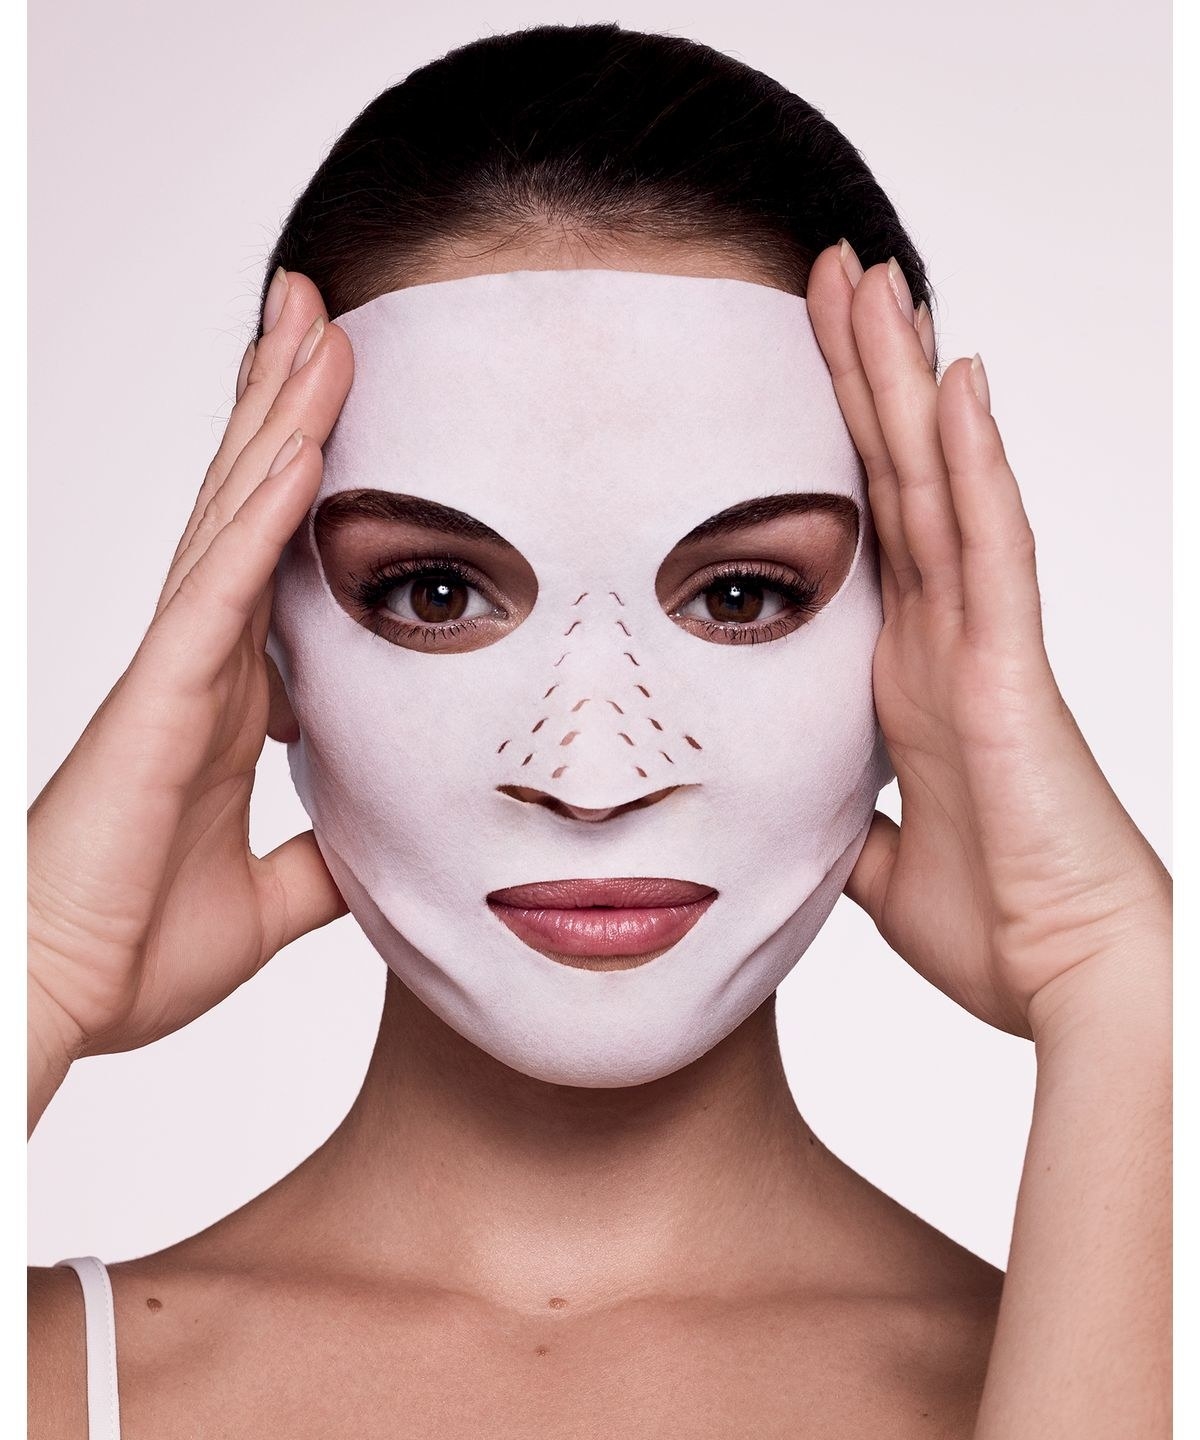 Масочки делаю. Маска для лица. М̆̈ӑ̈с̆̈к̆̈й̈ д̆̈л̆̈я̆̈ л̆̈й̈ц̆̈ӑ̈. Женщина в маске для лица. Тканевые маски для лица.